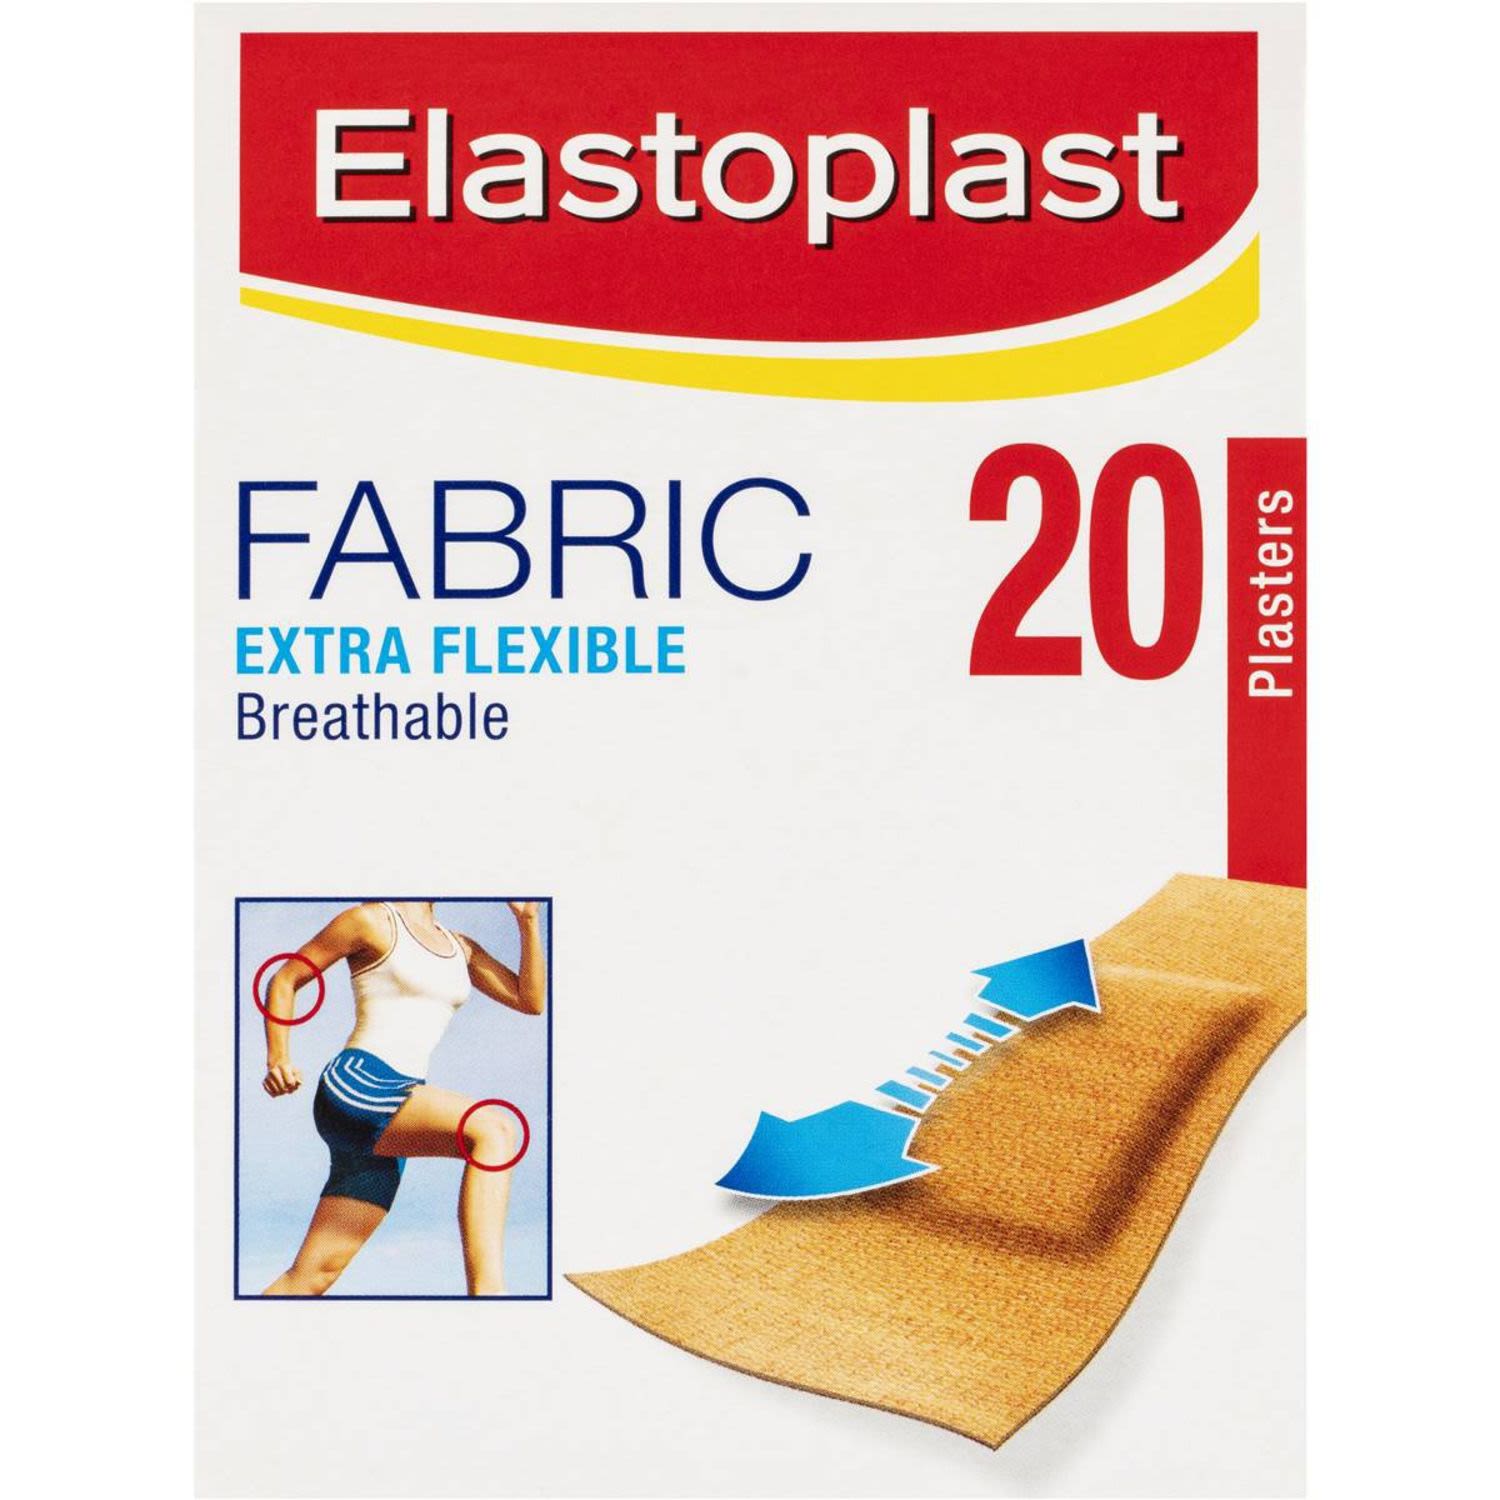 Elastoplast Fabric Plasters Extra Flexible, 20 Each